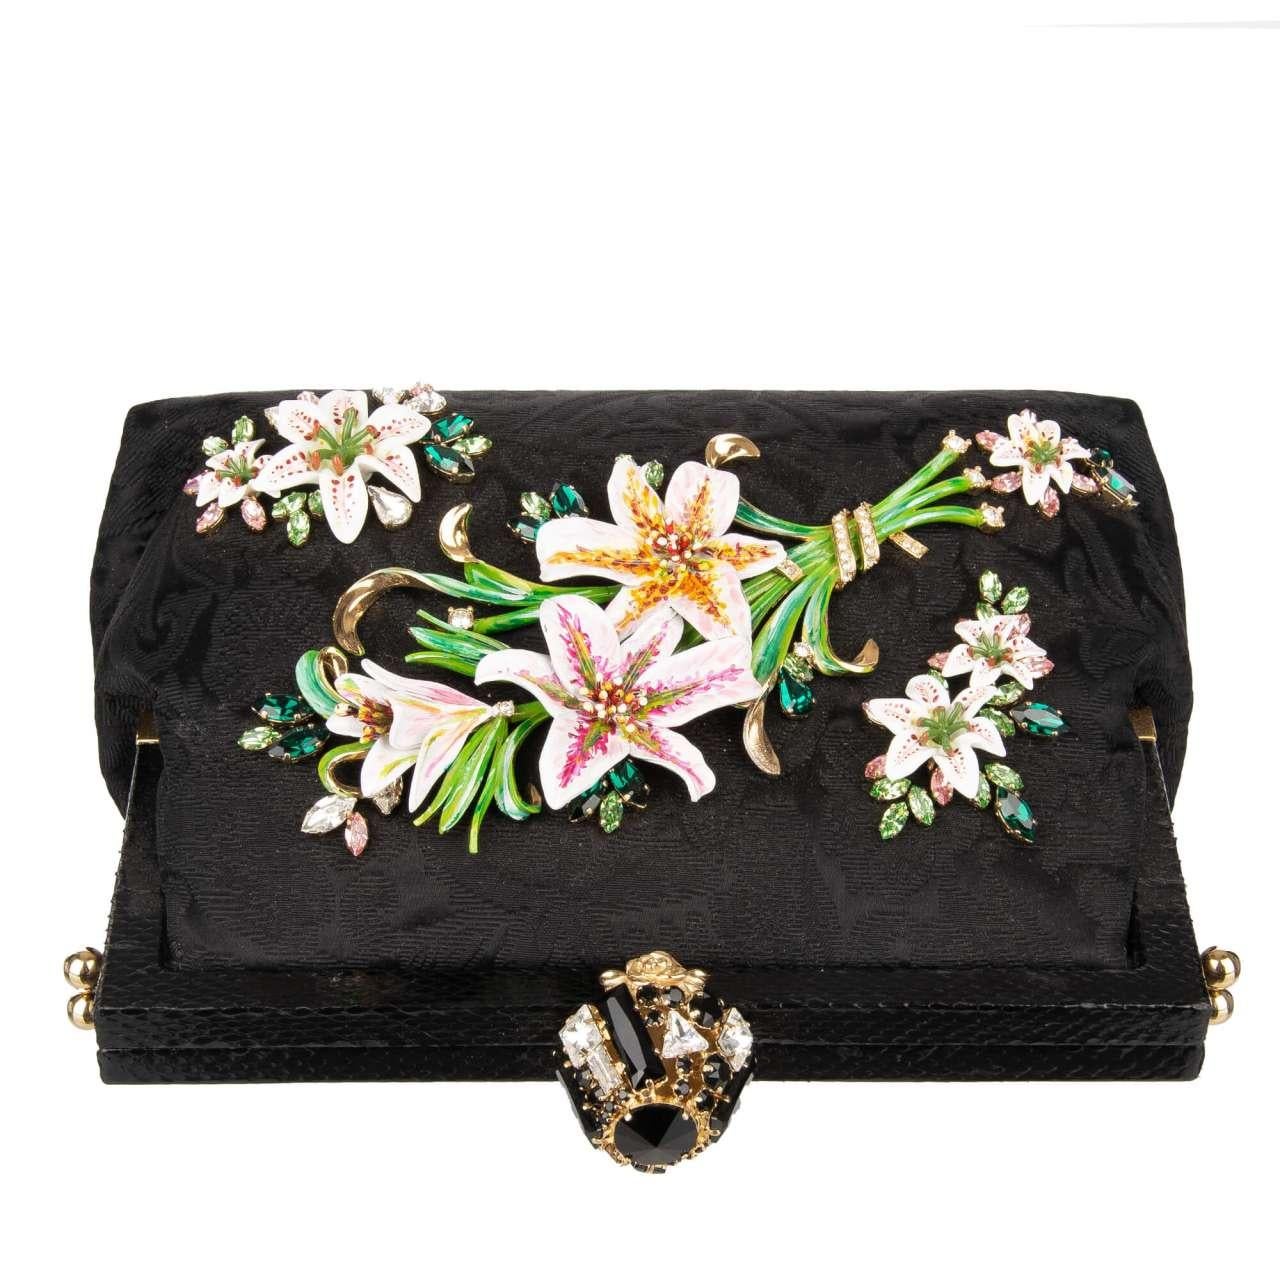 D&G - Lily Brocade Crystal Chain Snakeskin Evening Clutch Bag VANDA Black For Sale 2